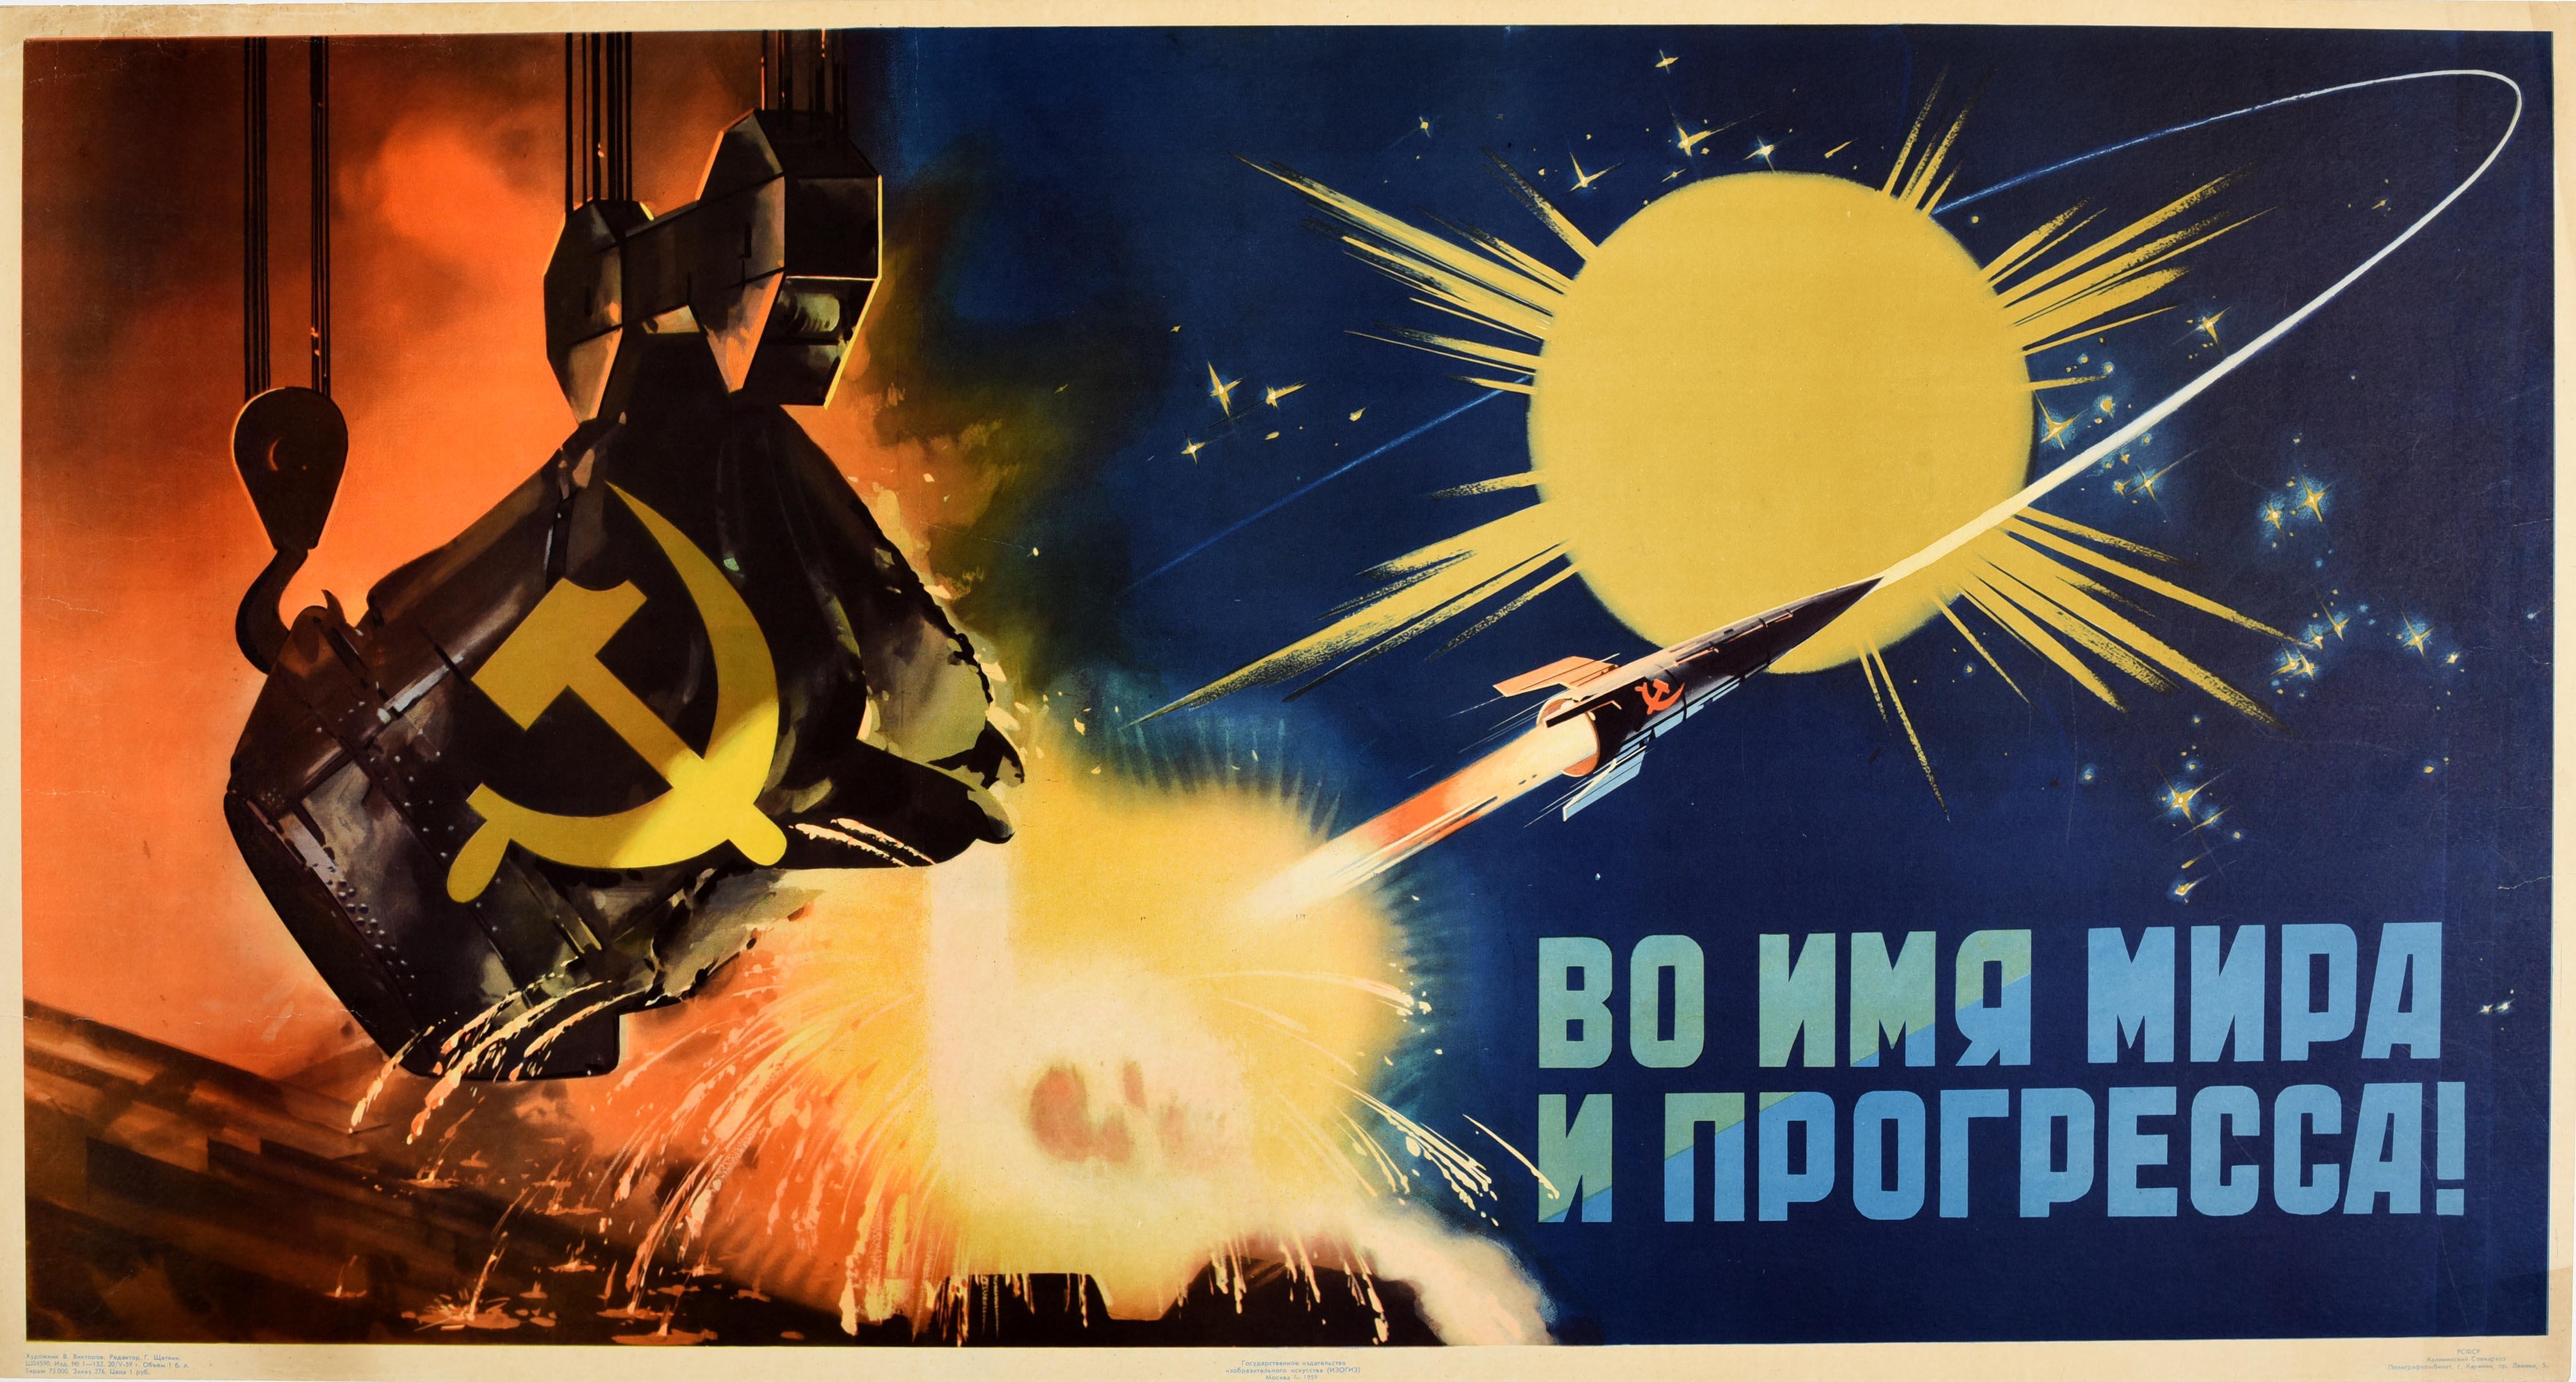 Valentin Viktorov Print - Original Vintage Soviet Poster In The Name Of Peace And Progress USSR Space Race